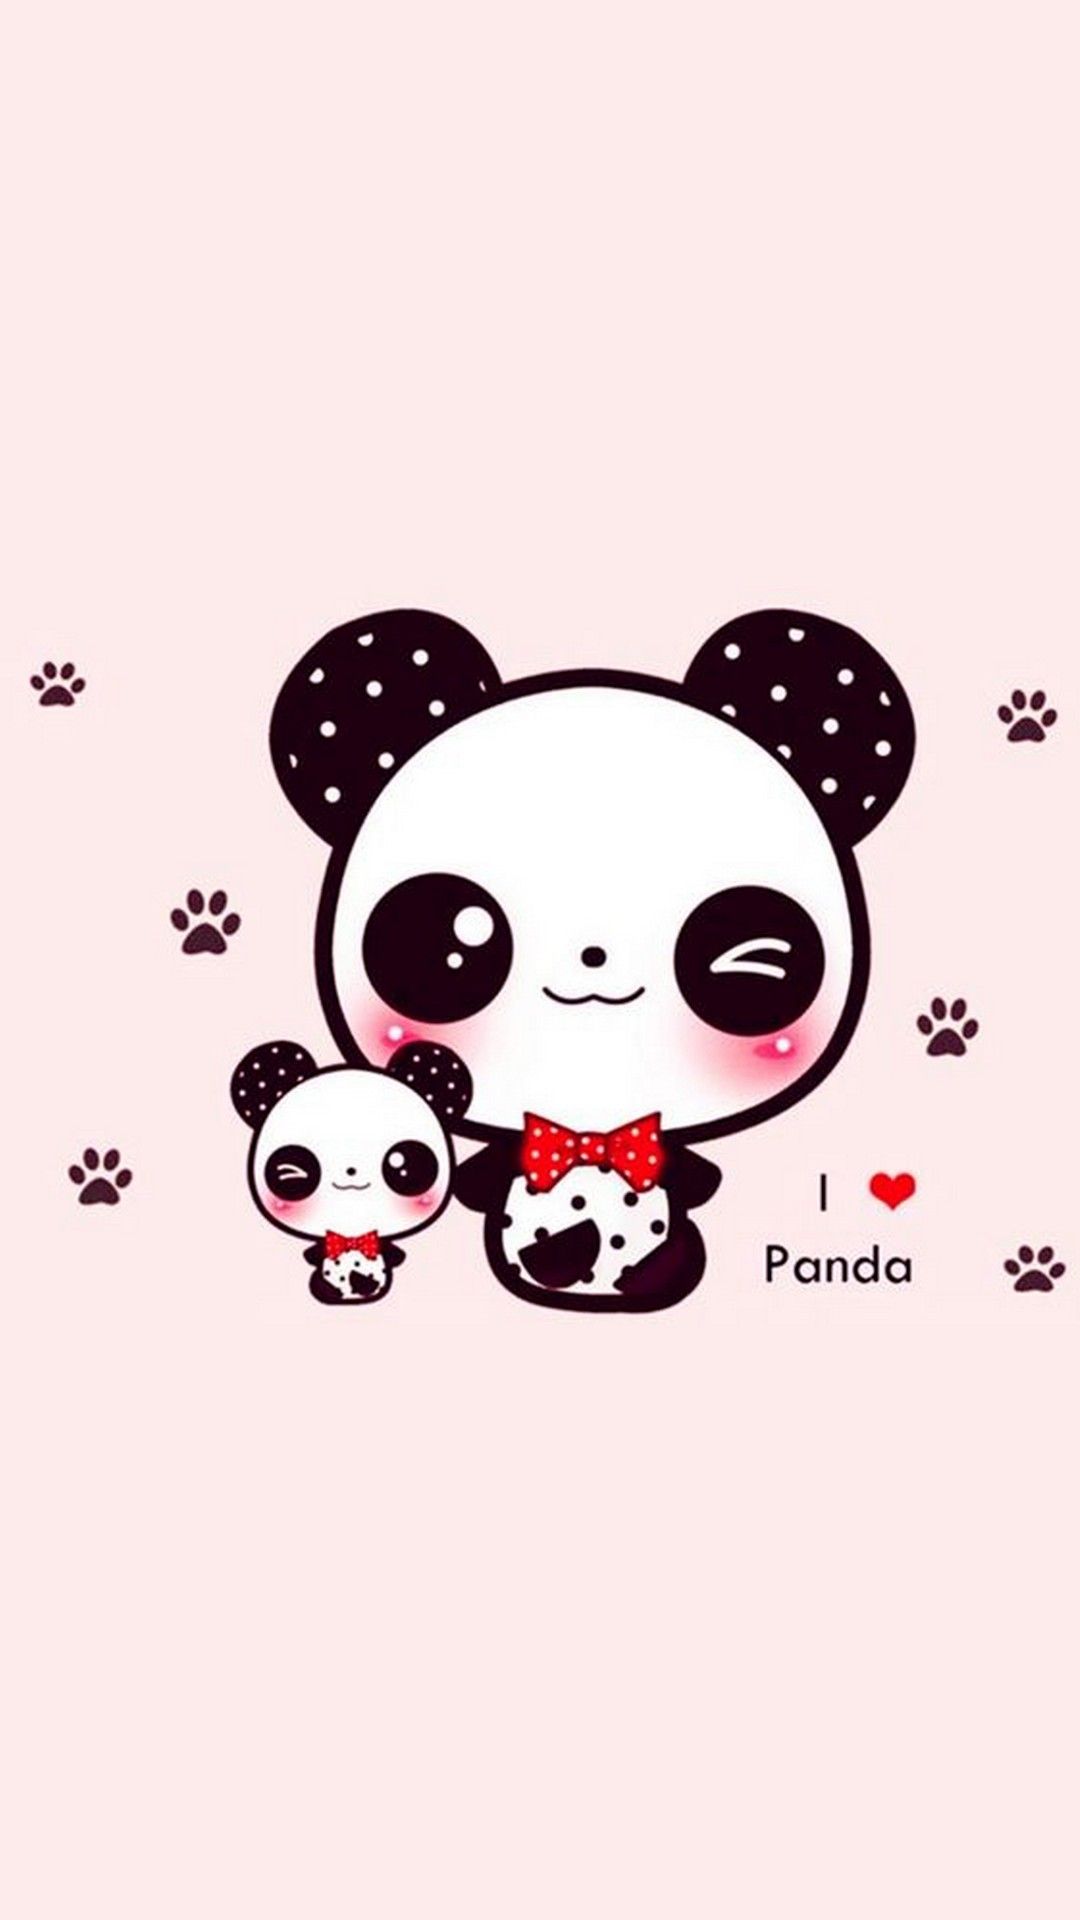 Cute Panda Wallpaper For iPhone 3D iPhone Wallpaper